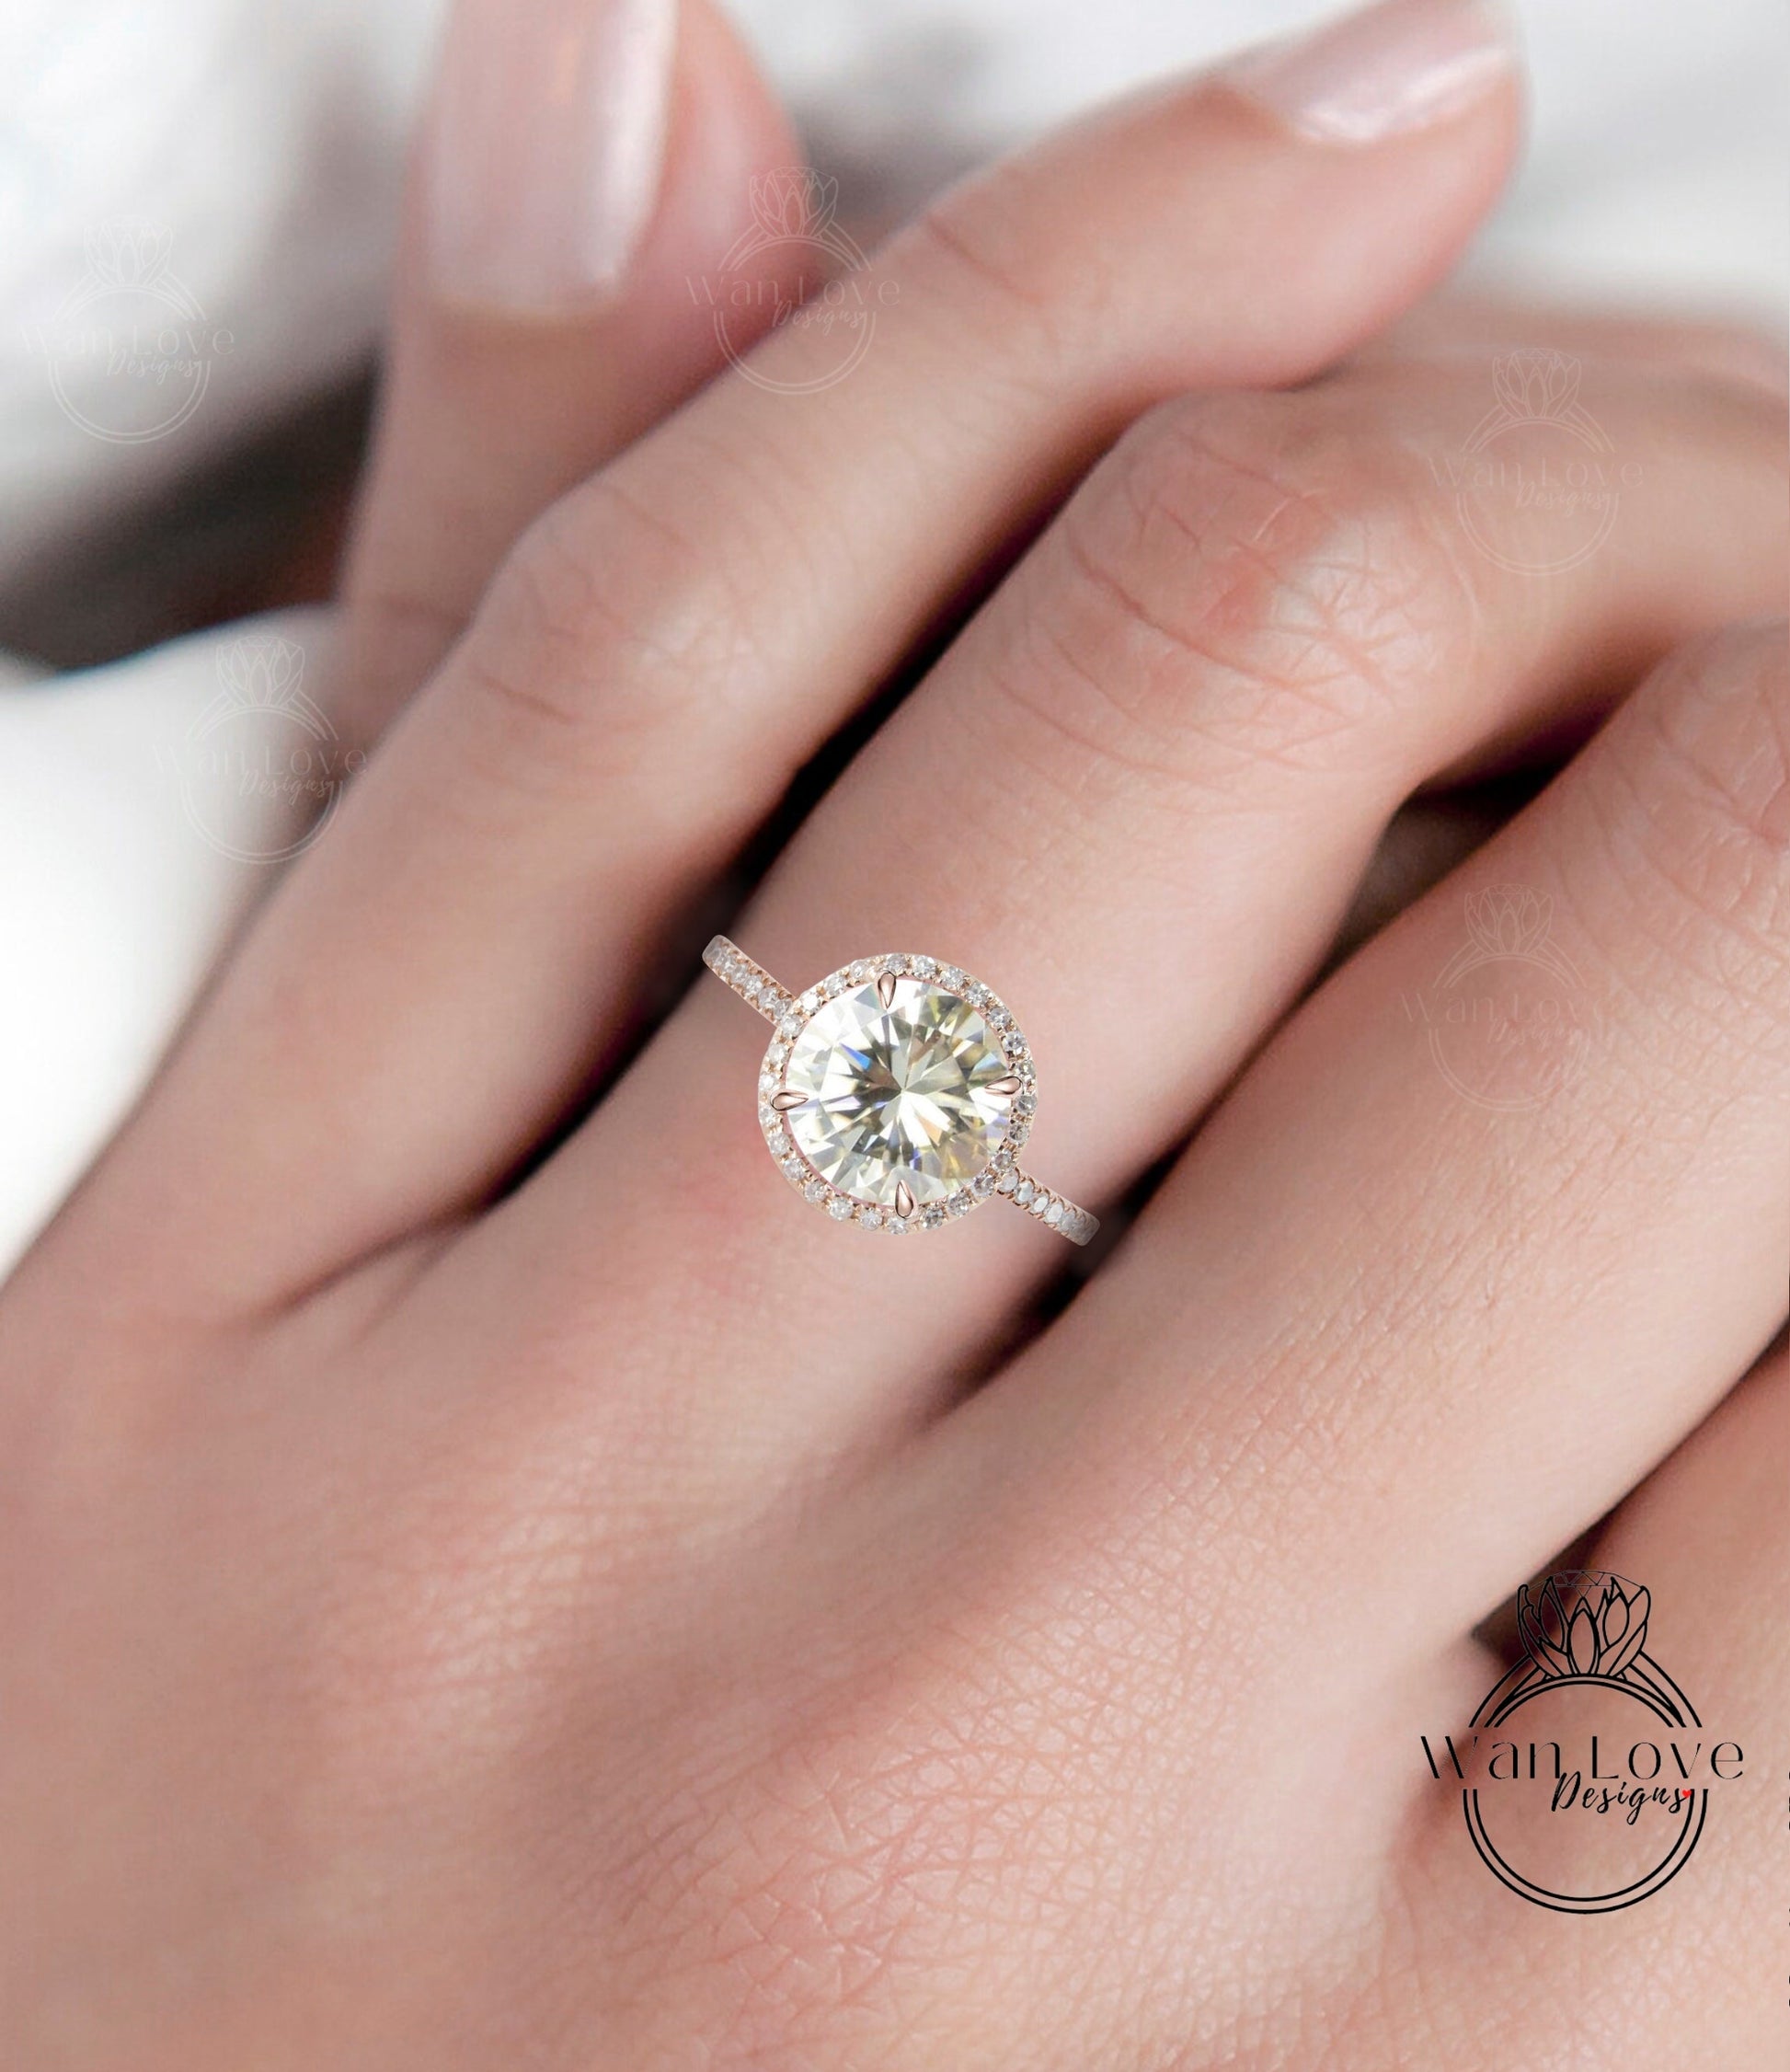 Diamond Round Halo Ring Champagne Moissanite Diamond Round cut Engagement Ring Art Deco vintage Ring antique wedding bridal promise ring Wan Love Designs